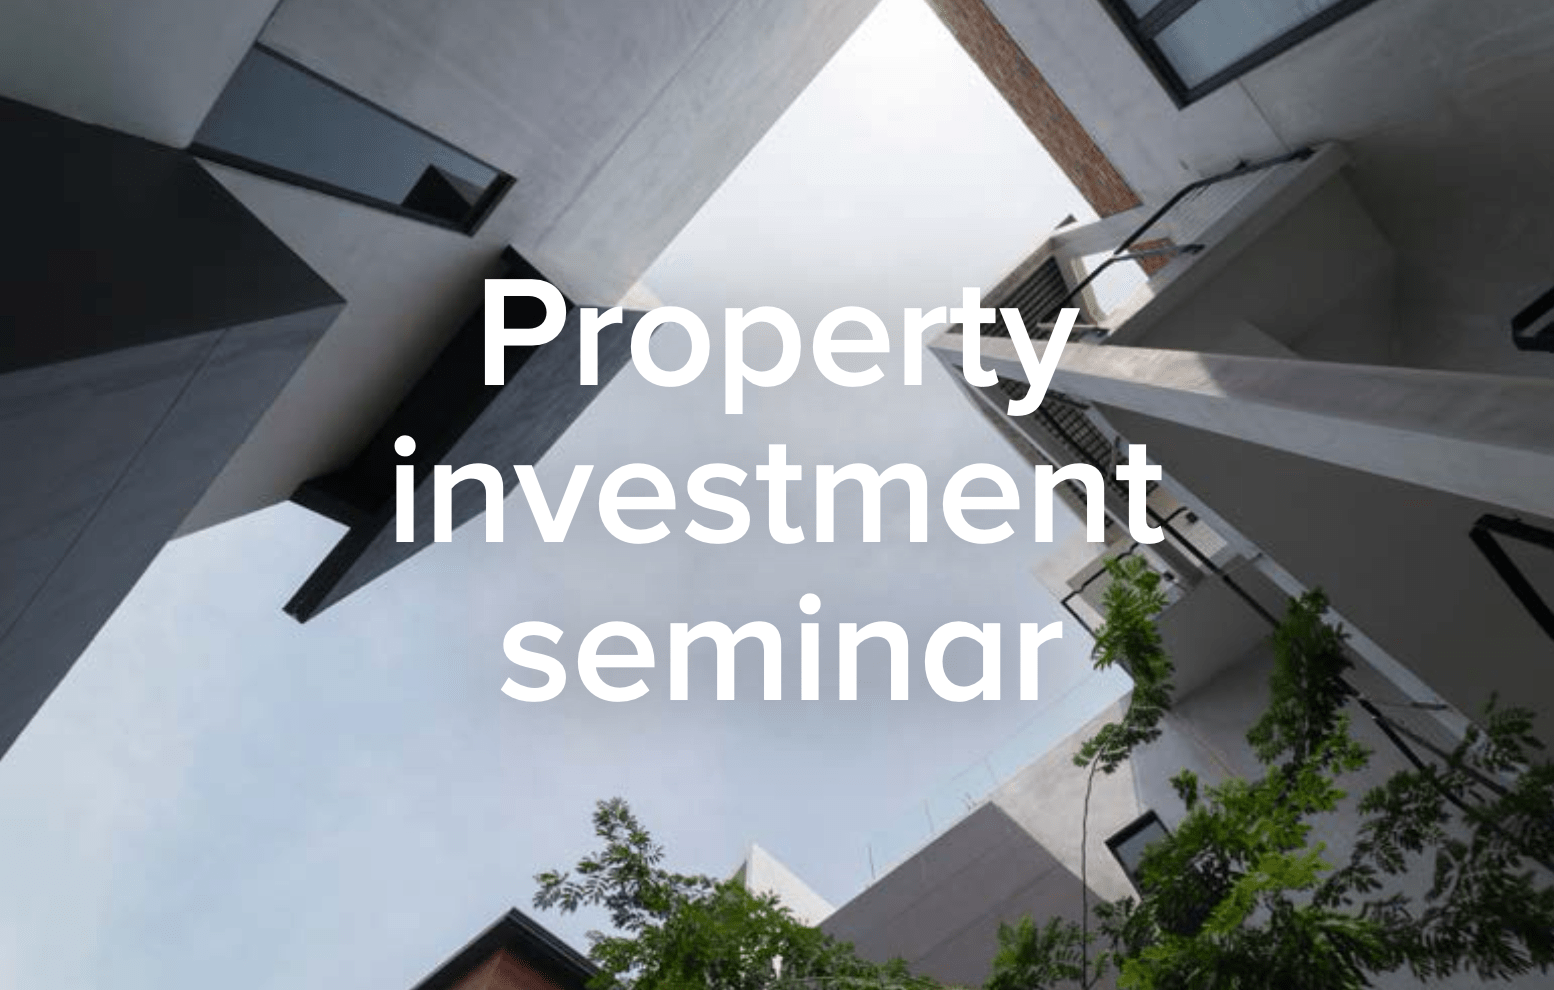 OBrien Real Estate Investment Seminar.